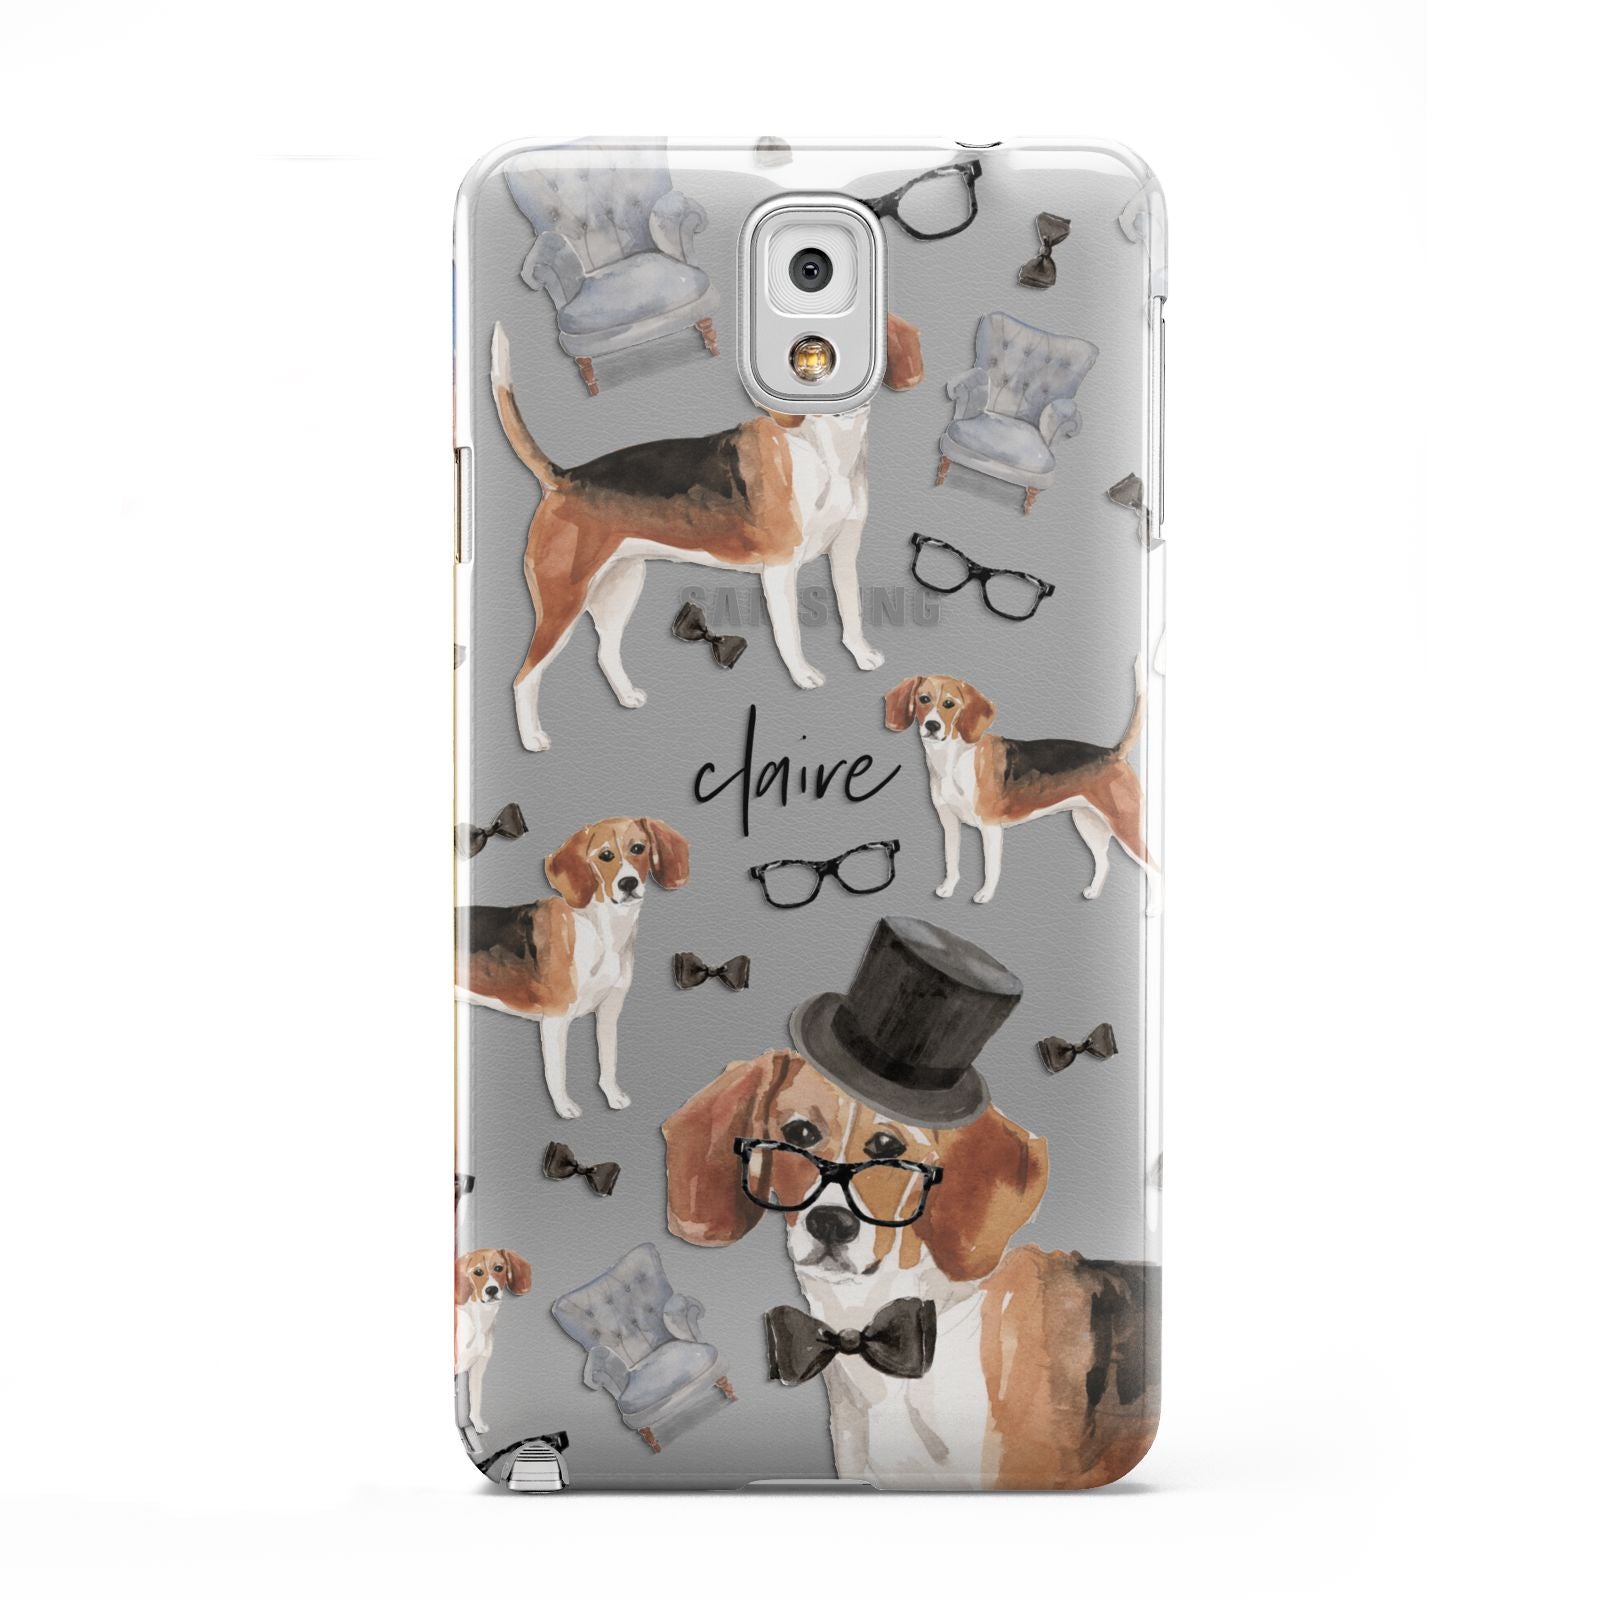 Personalised Beagle Dog Samsung Galaxy Note 3 Case